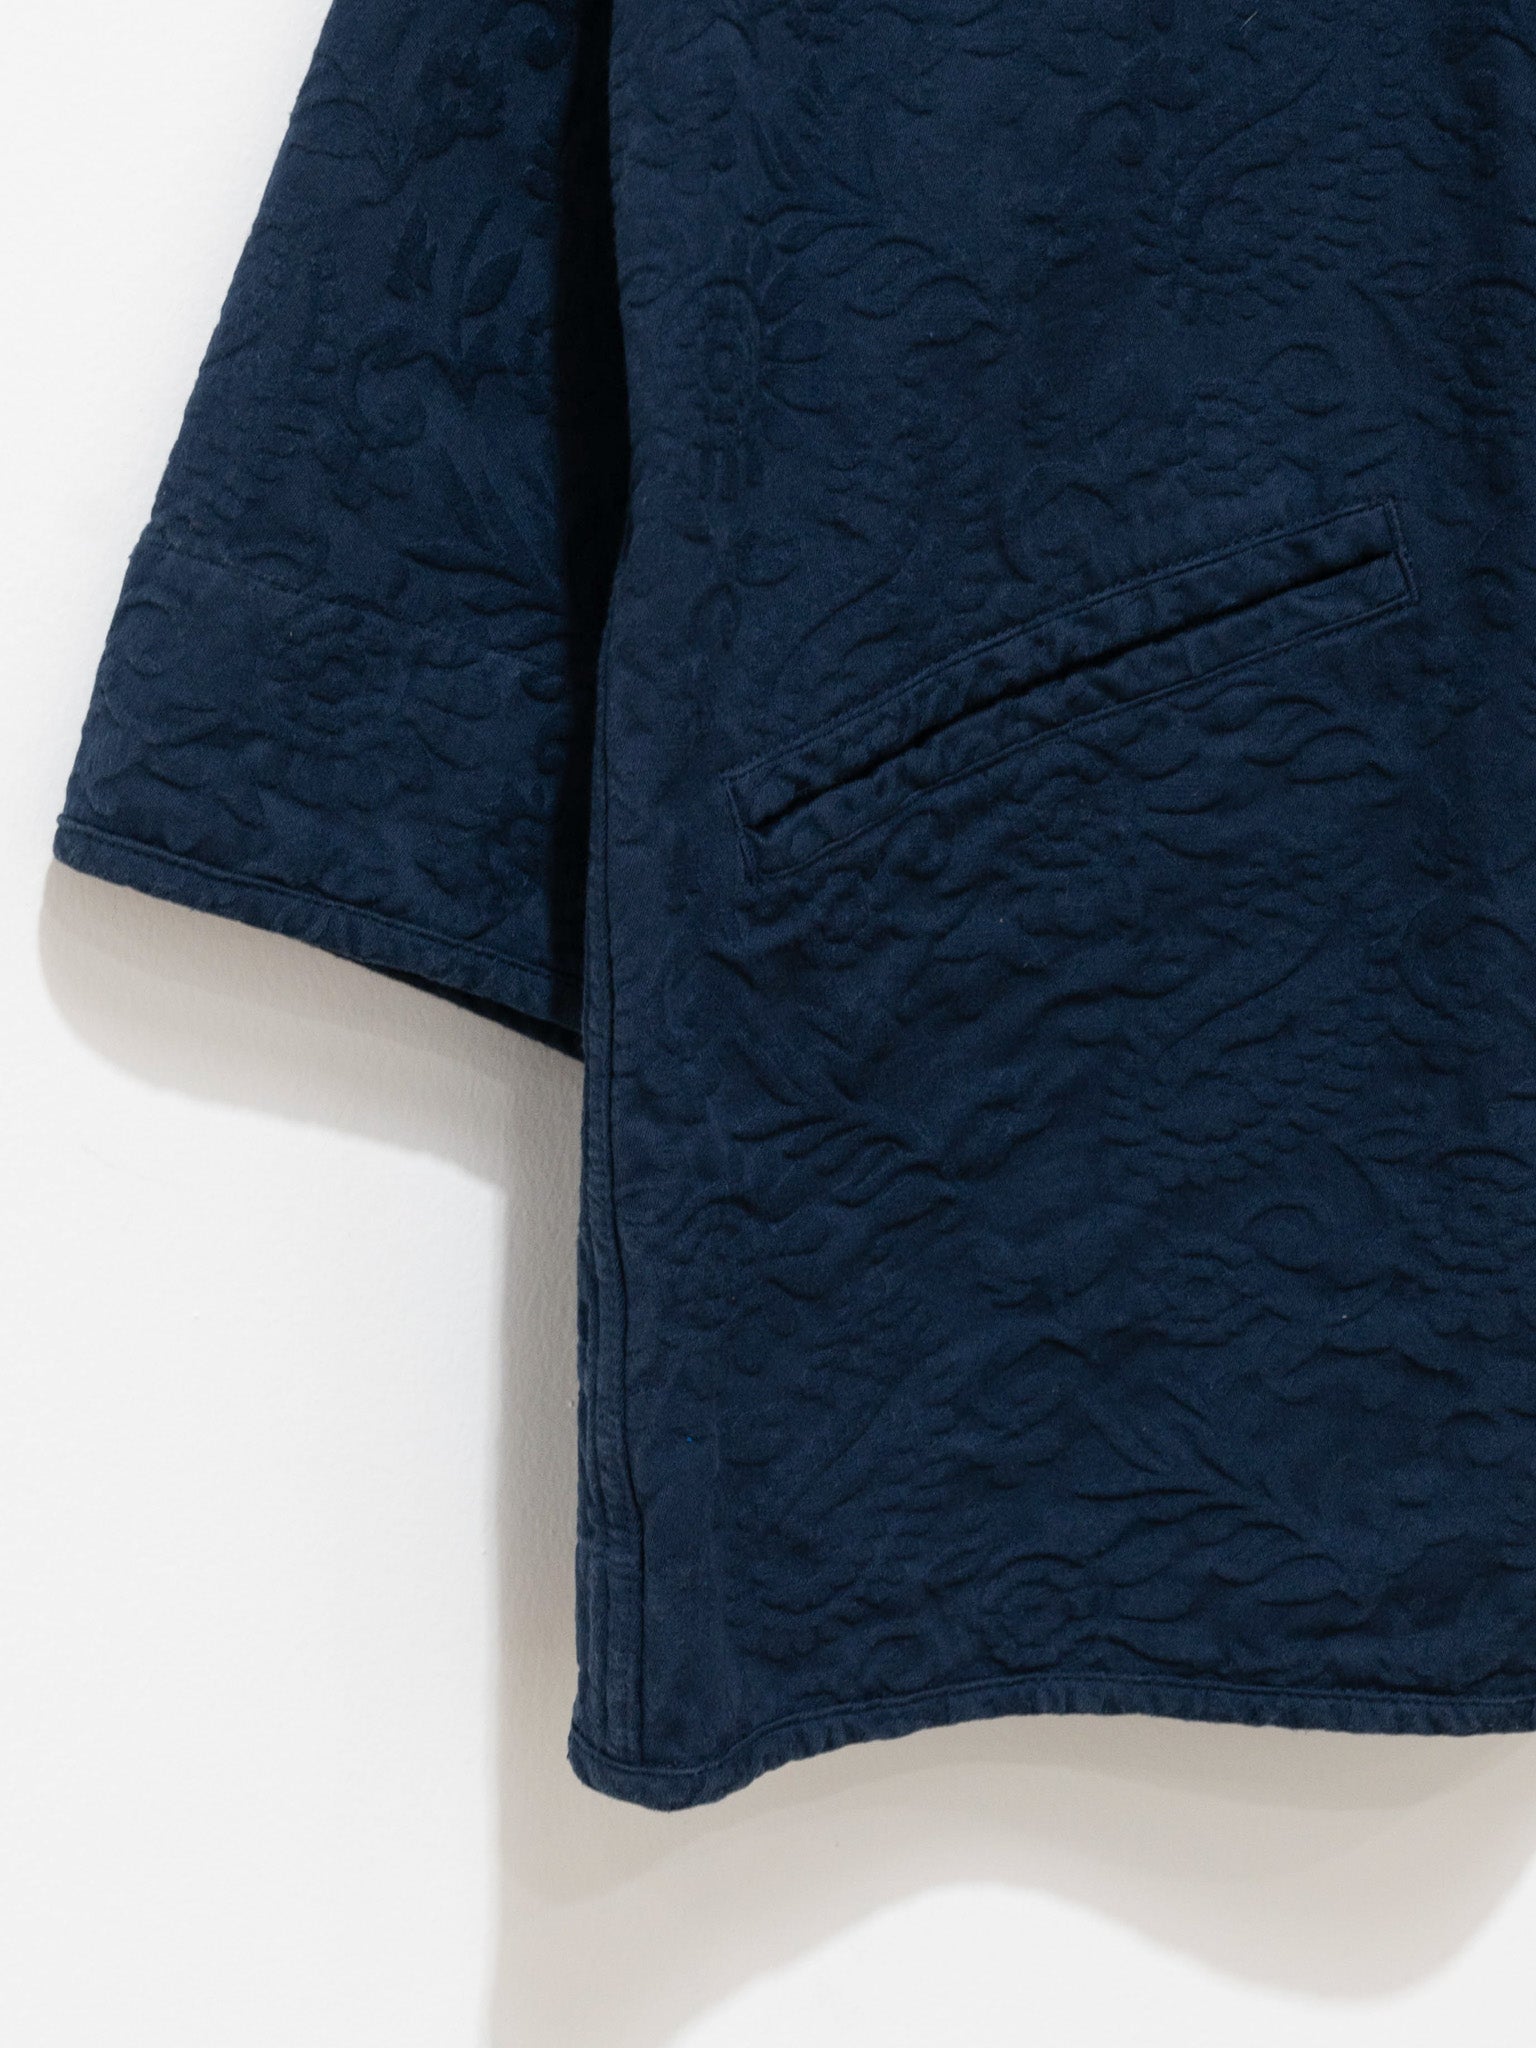 Namu Shop - ts(s) Garment Dye Paisley Collarless Easy Jacket - Navy